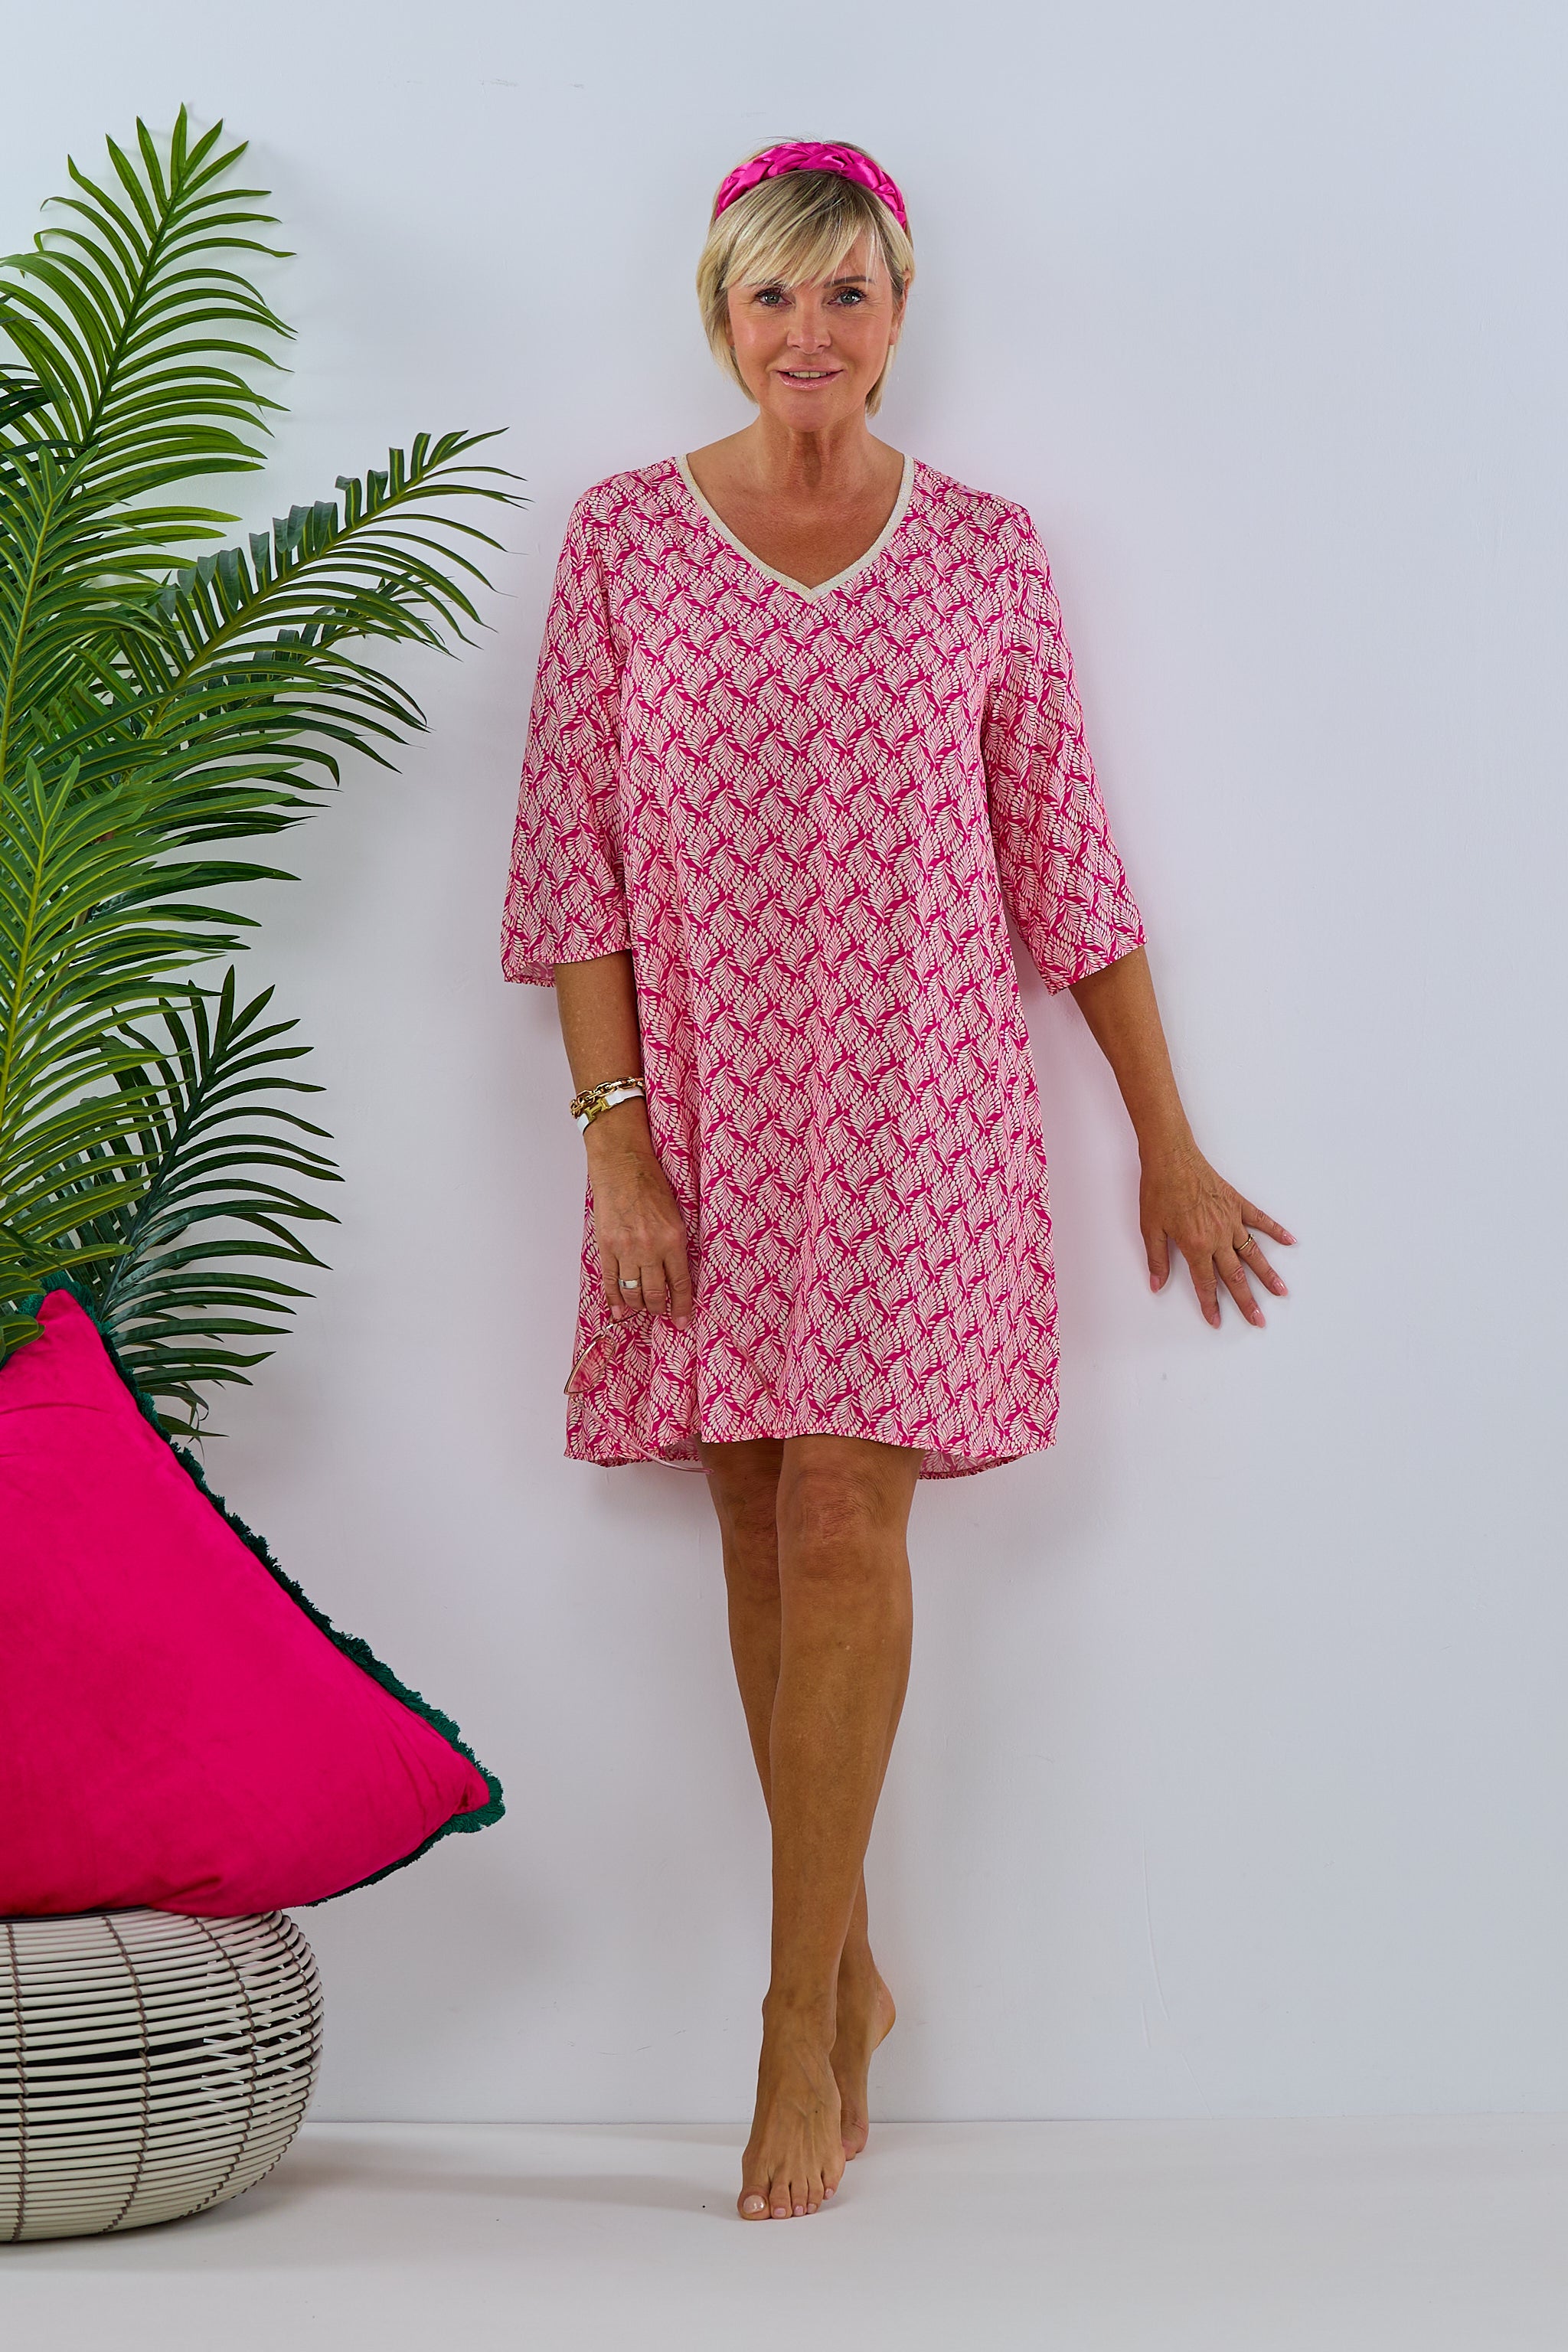 Damen Kleid Tunika mit Muster pink Trends & Lifestyle 